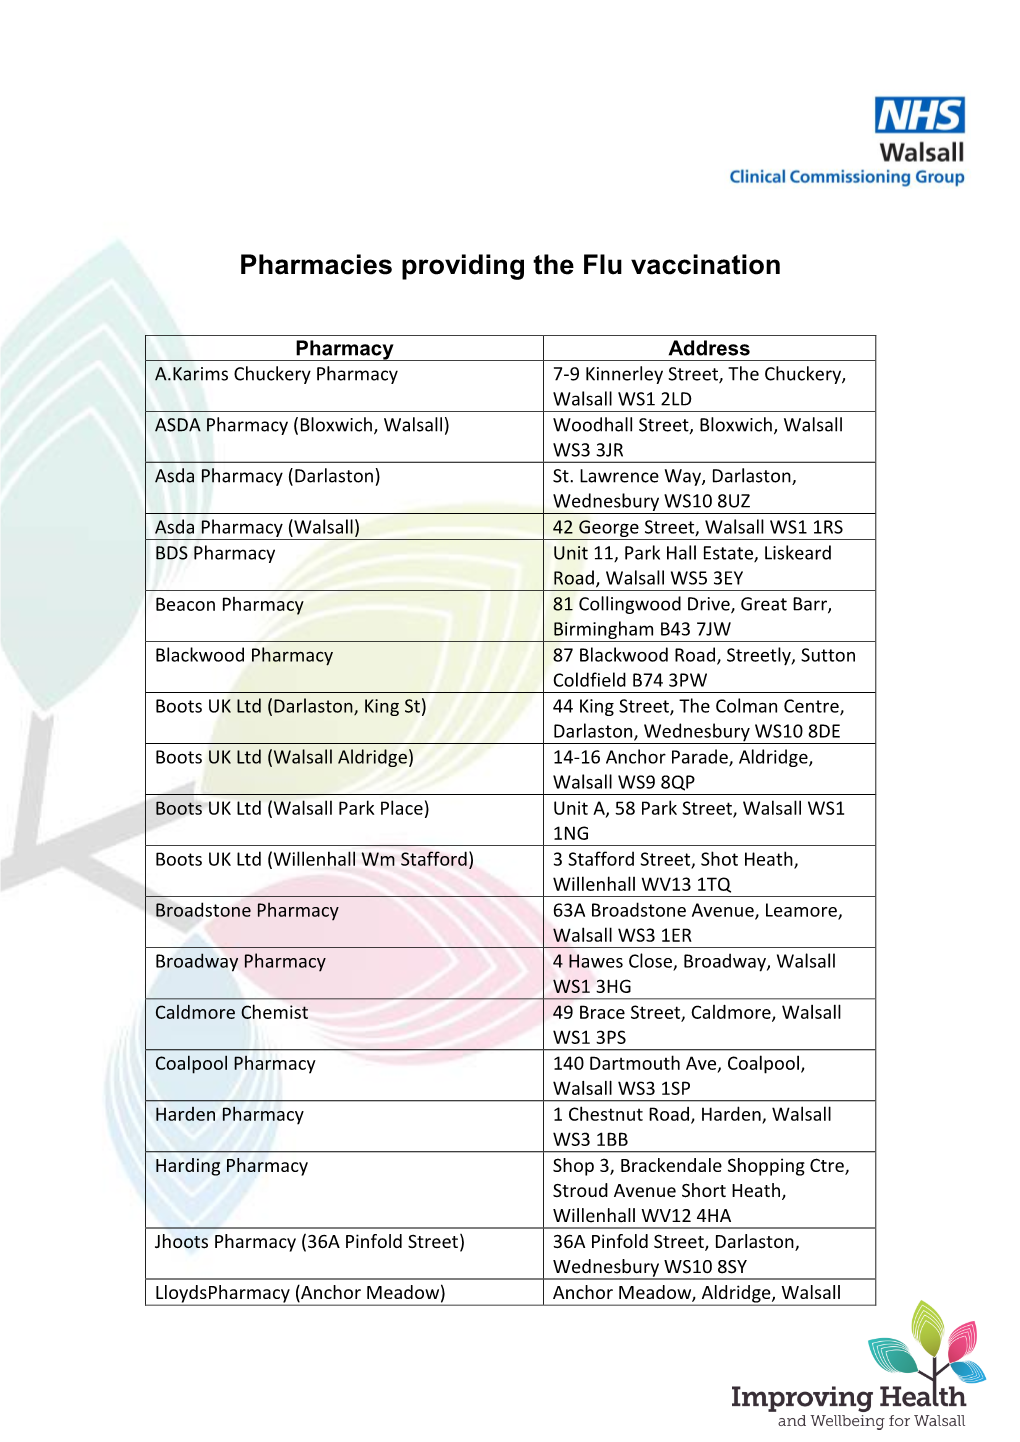 Pharmacies Providing the Flu Vaccination